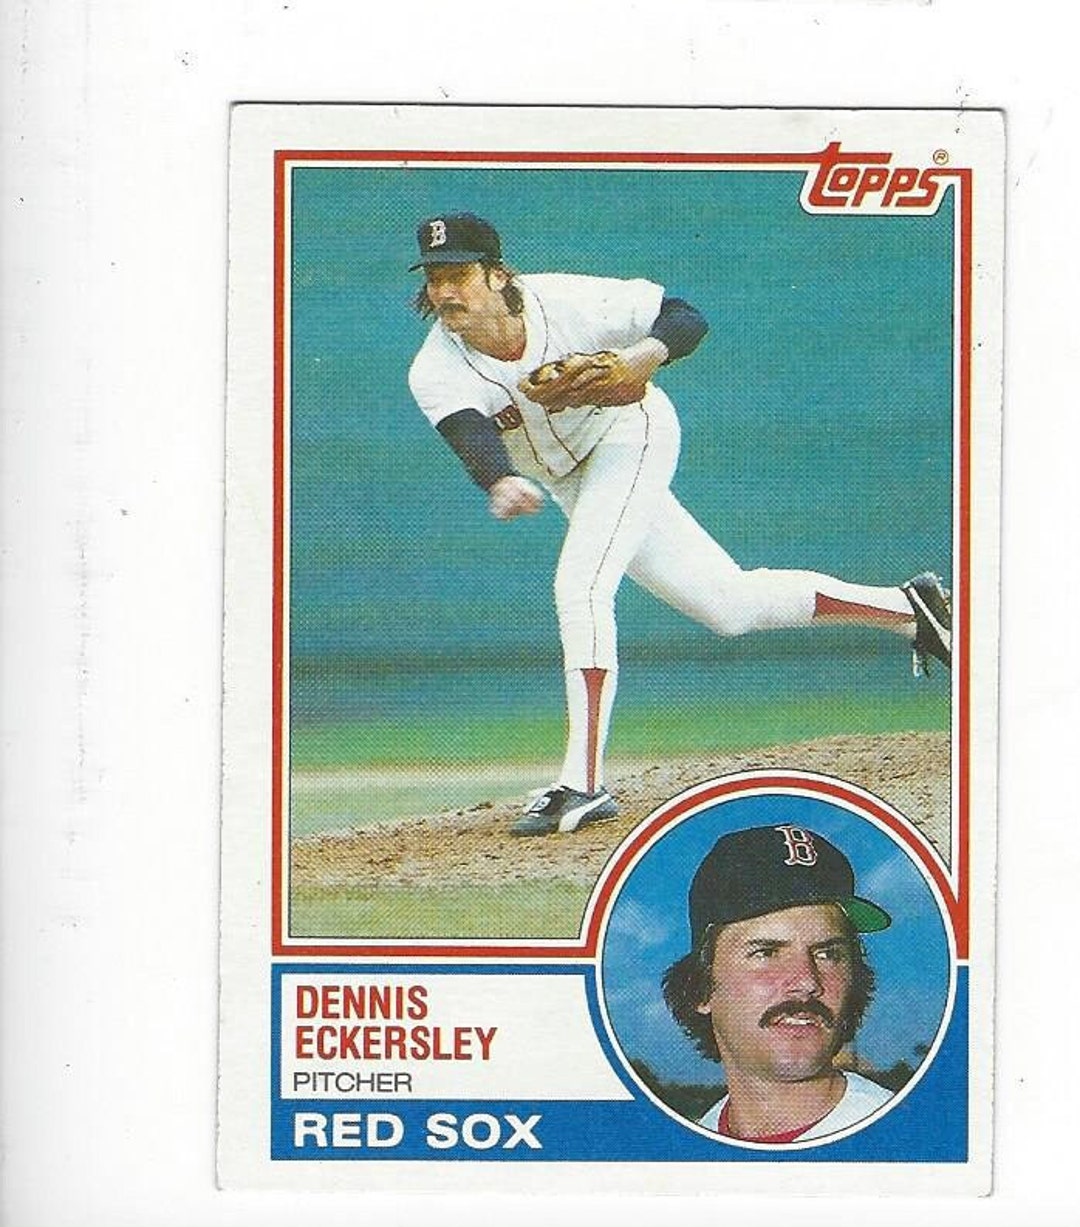 1983 DENNIS ECKERSLEY Boston RED S0X Vintage Topps Baseball 